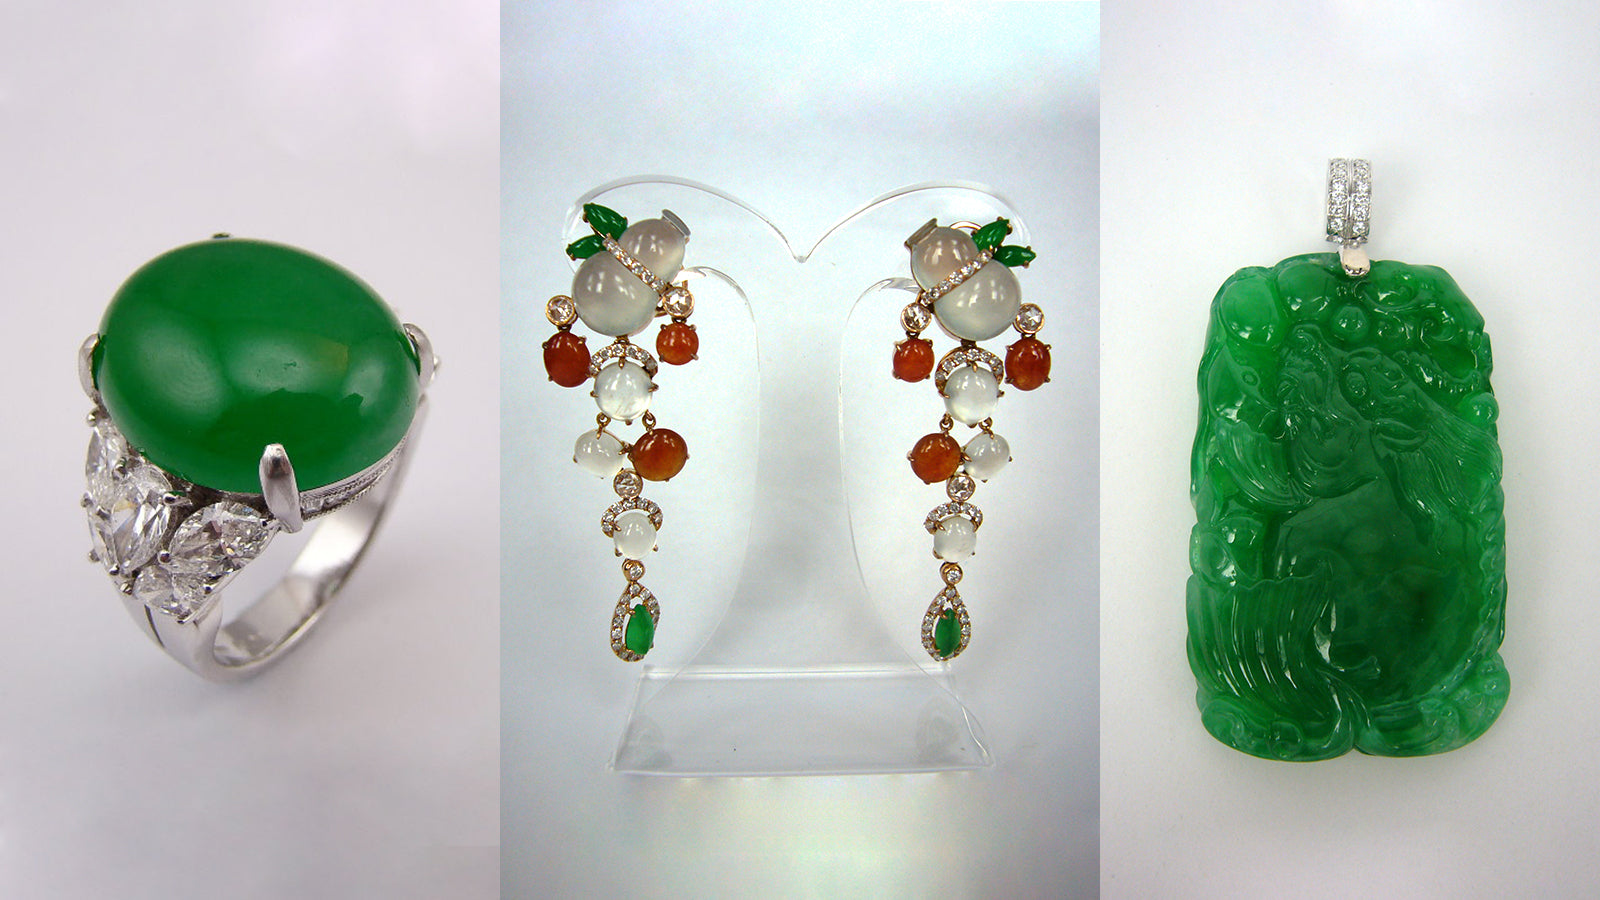 Burmese jadeite: natural premium jade ring, earring, pendant jewelry